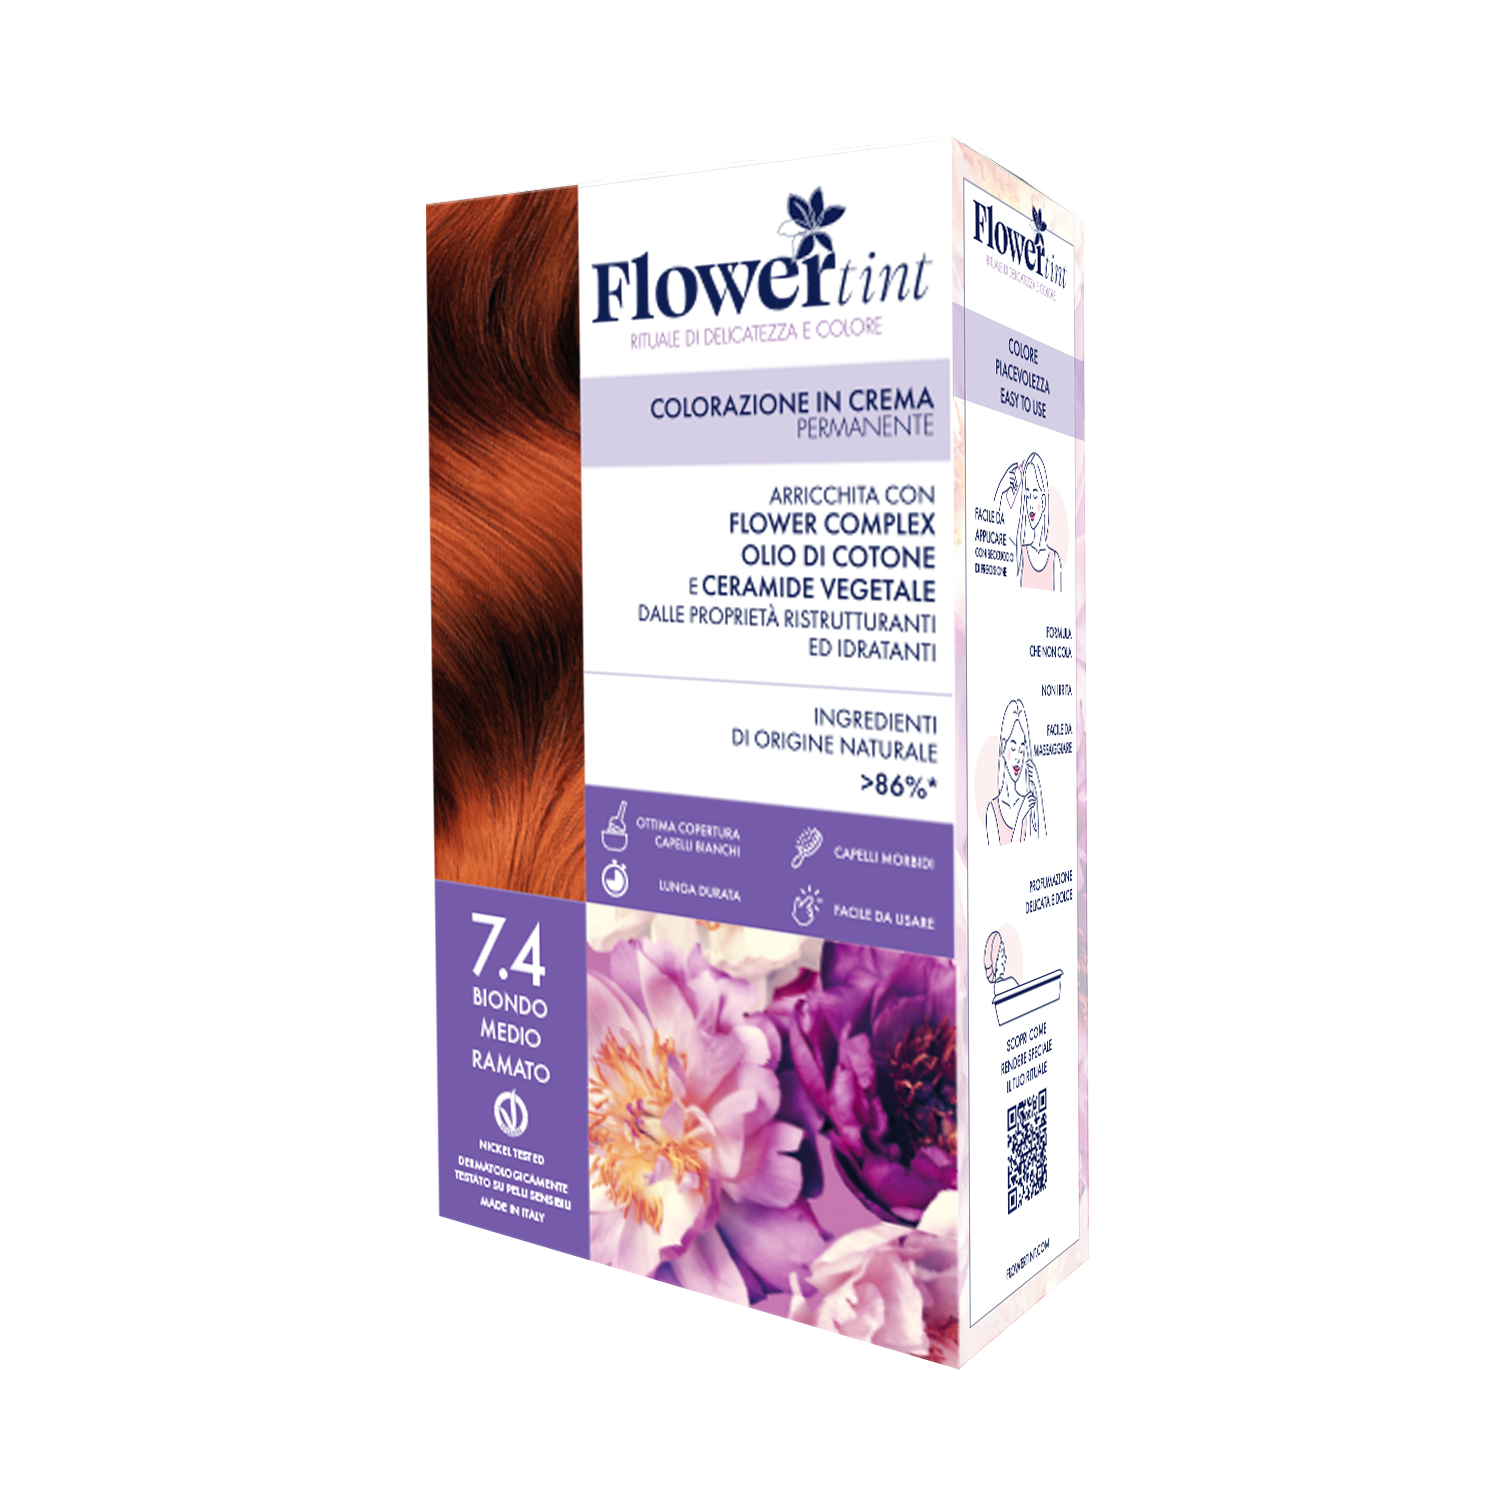 Flowertint tinta capelli N 7.4 biondo medio ramato